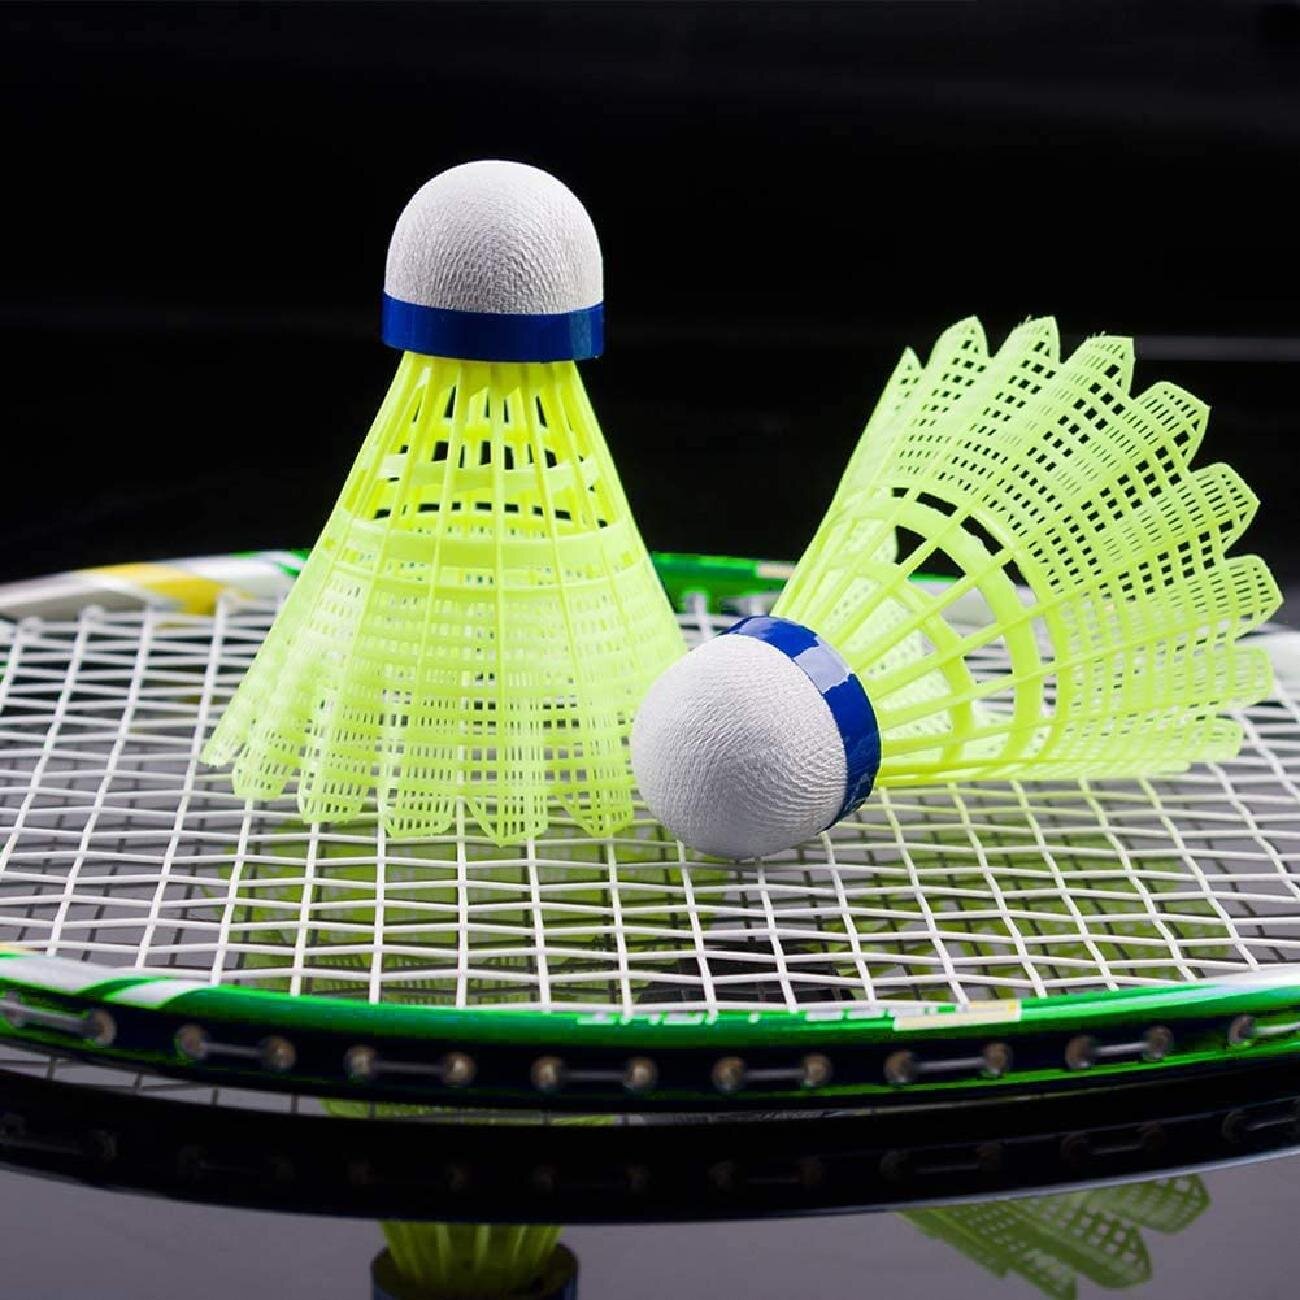 w/ Carry Bag Carbon Shaft Badminton Racket Set of 4 for Backyard Family Game